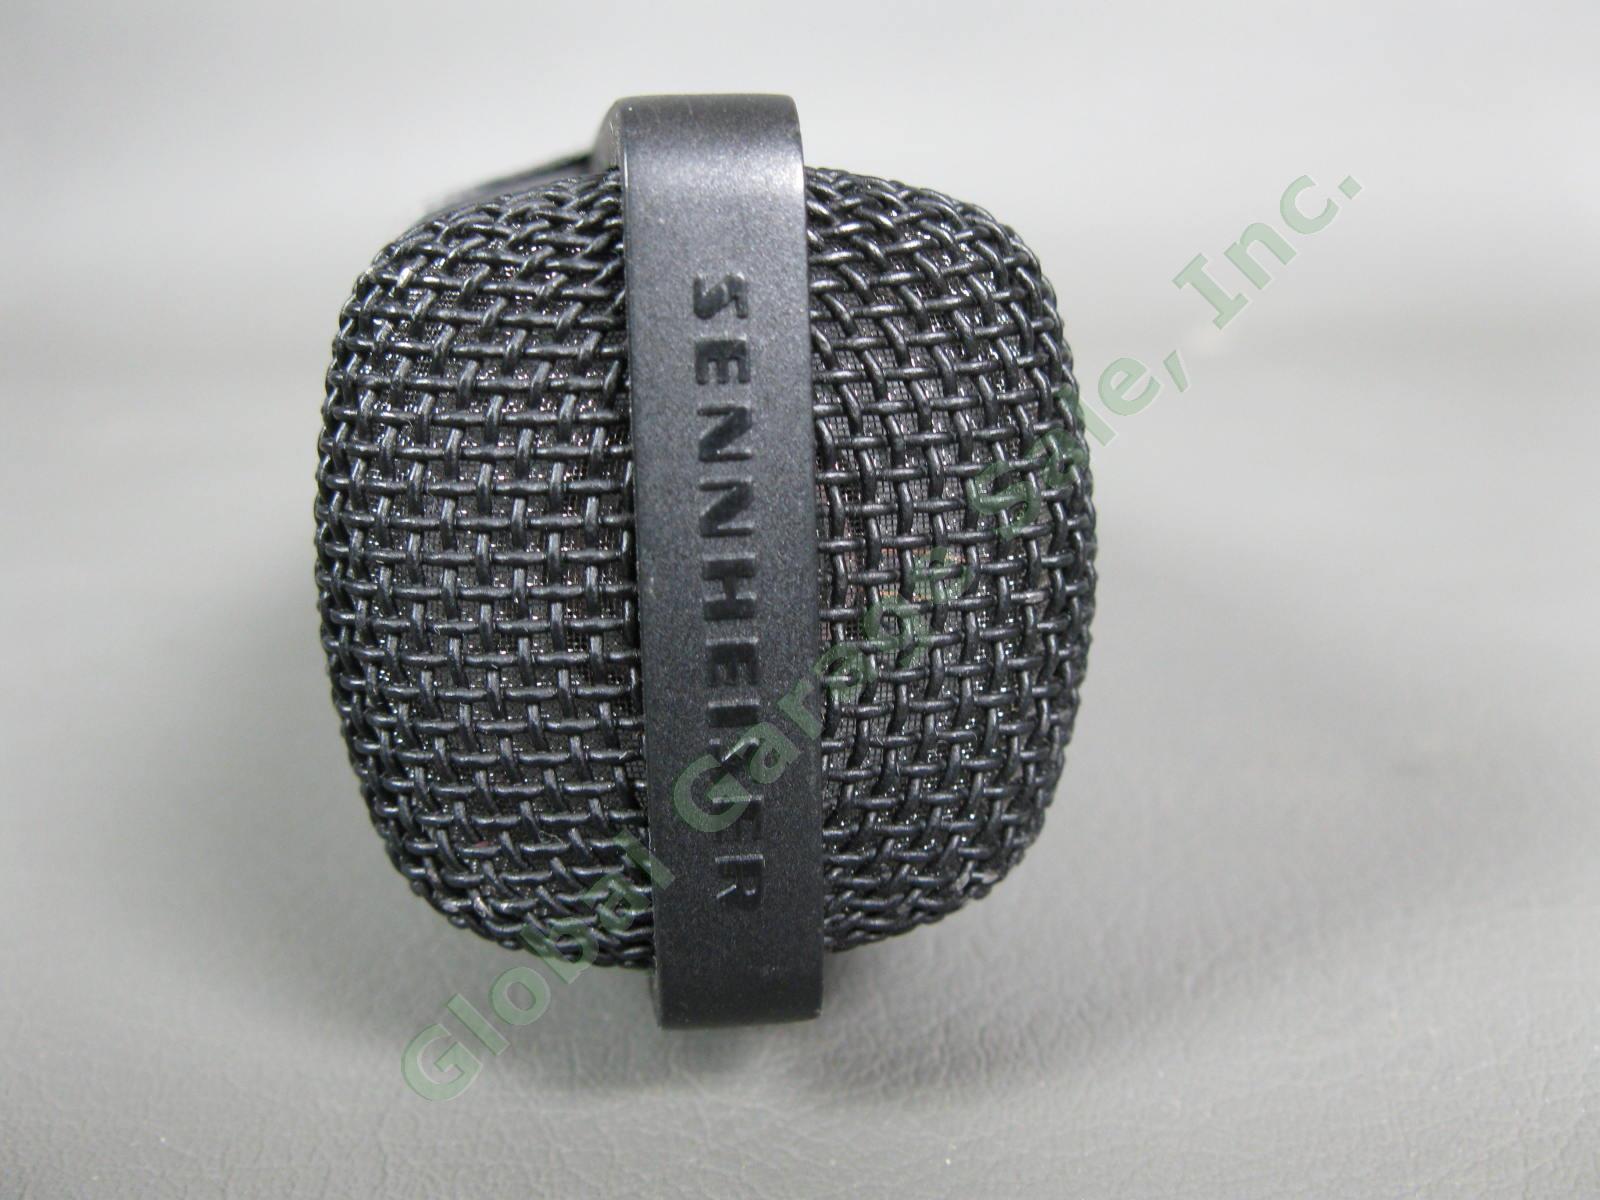 Sennheiser MD 421 II Dynamic Cardioid Professional Microphone Black Mic Working! 8